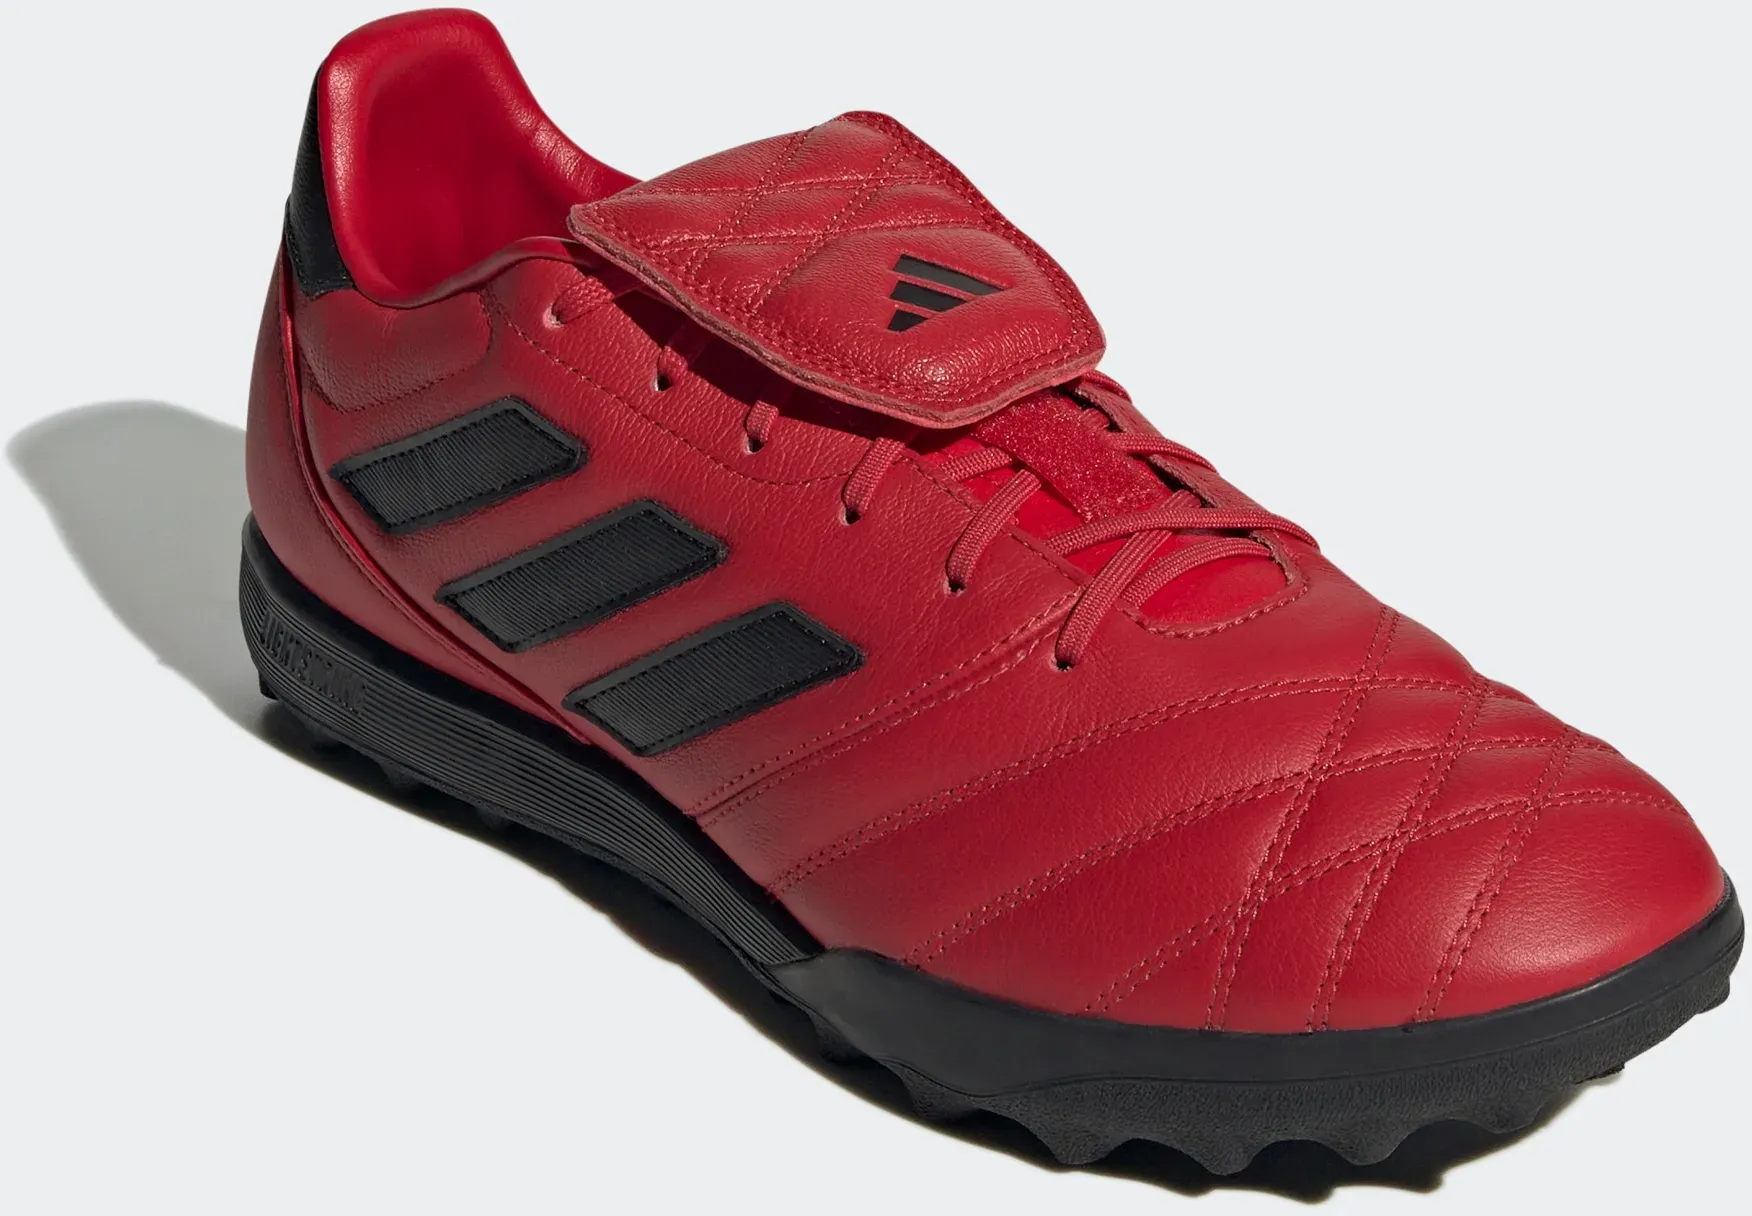 Fußballschuh ADIDAS PERFORMANCE "COPA GLORO TF" Gr. 42, rot (scarlet, core black, black) Schuhe Fußballschuhe